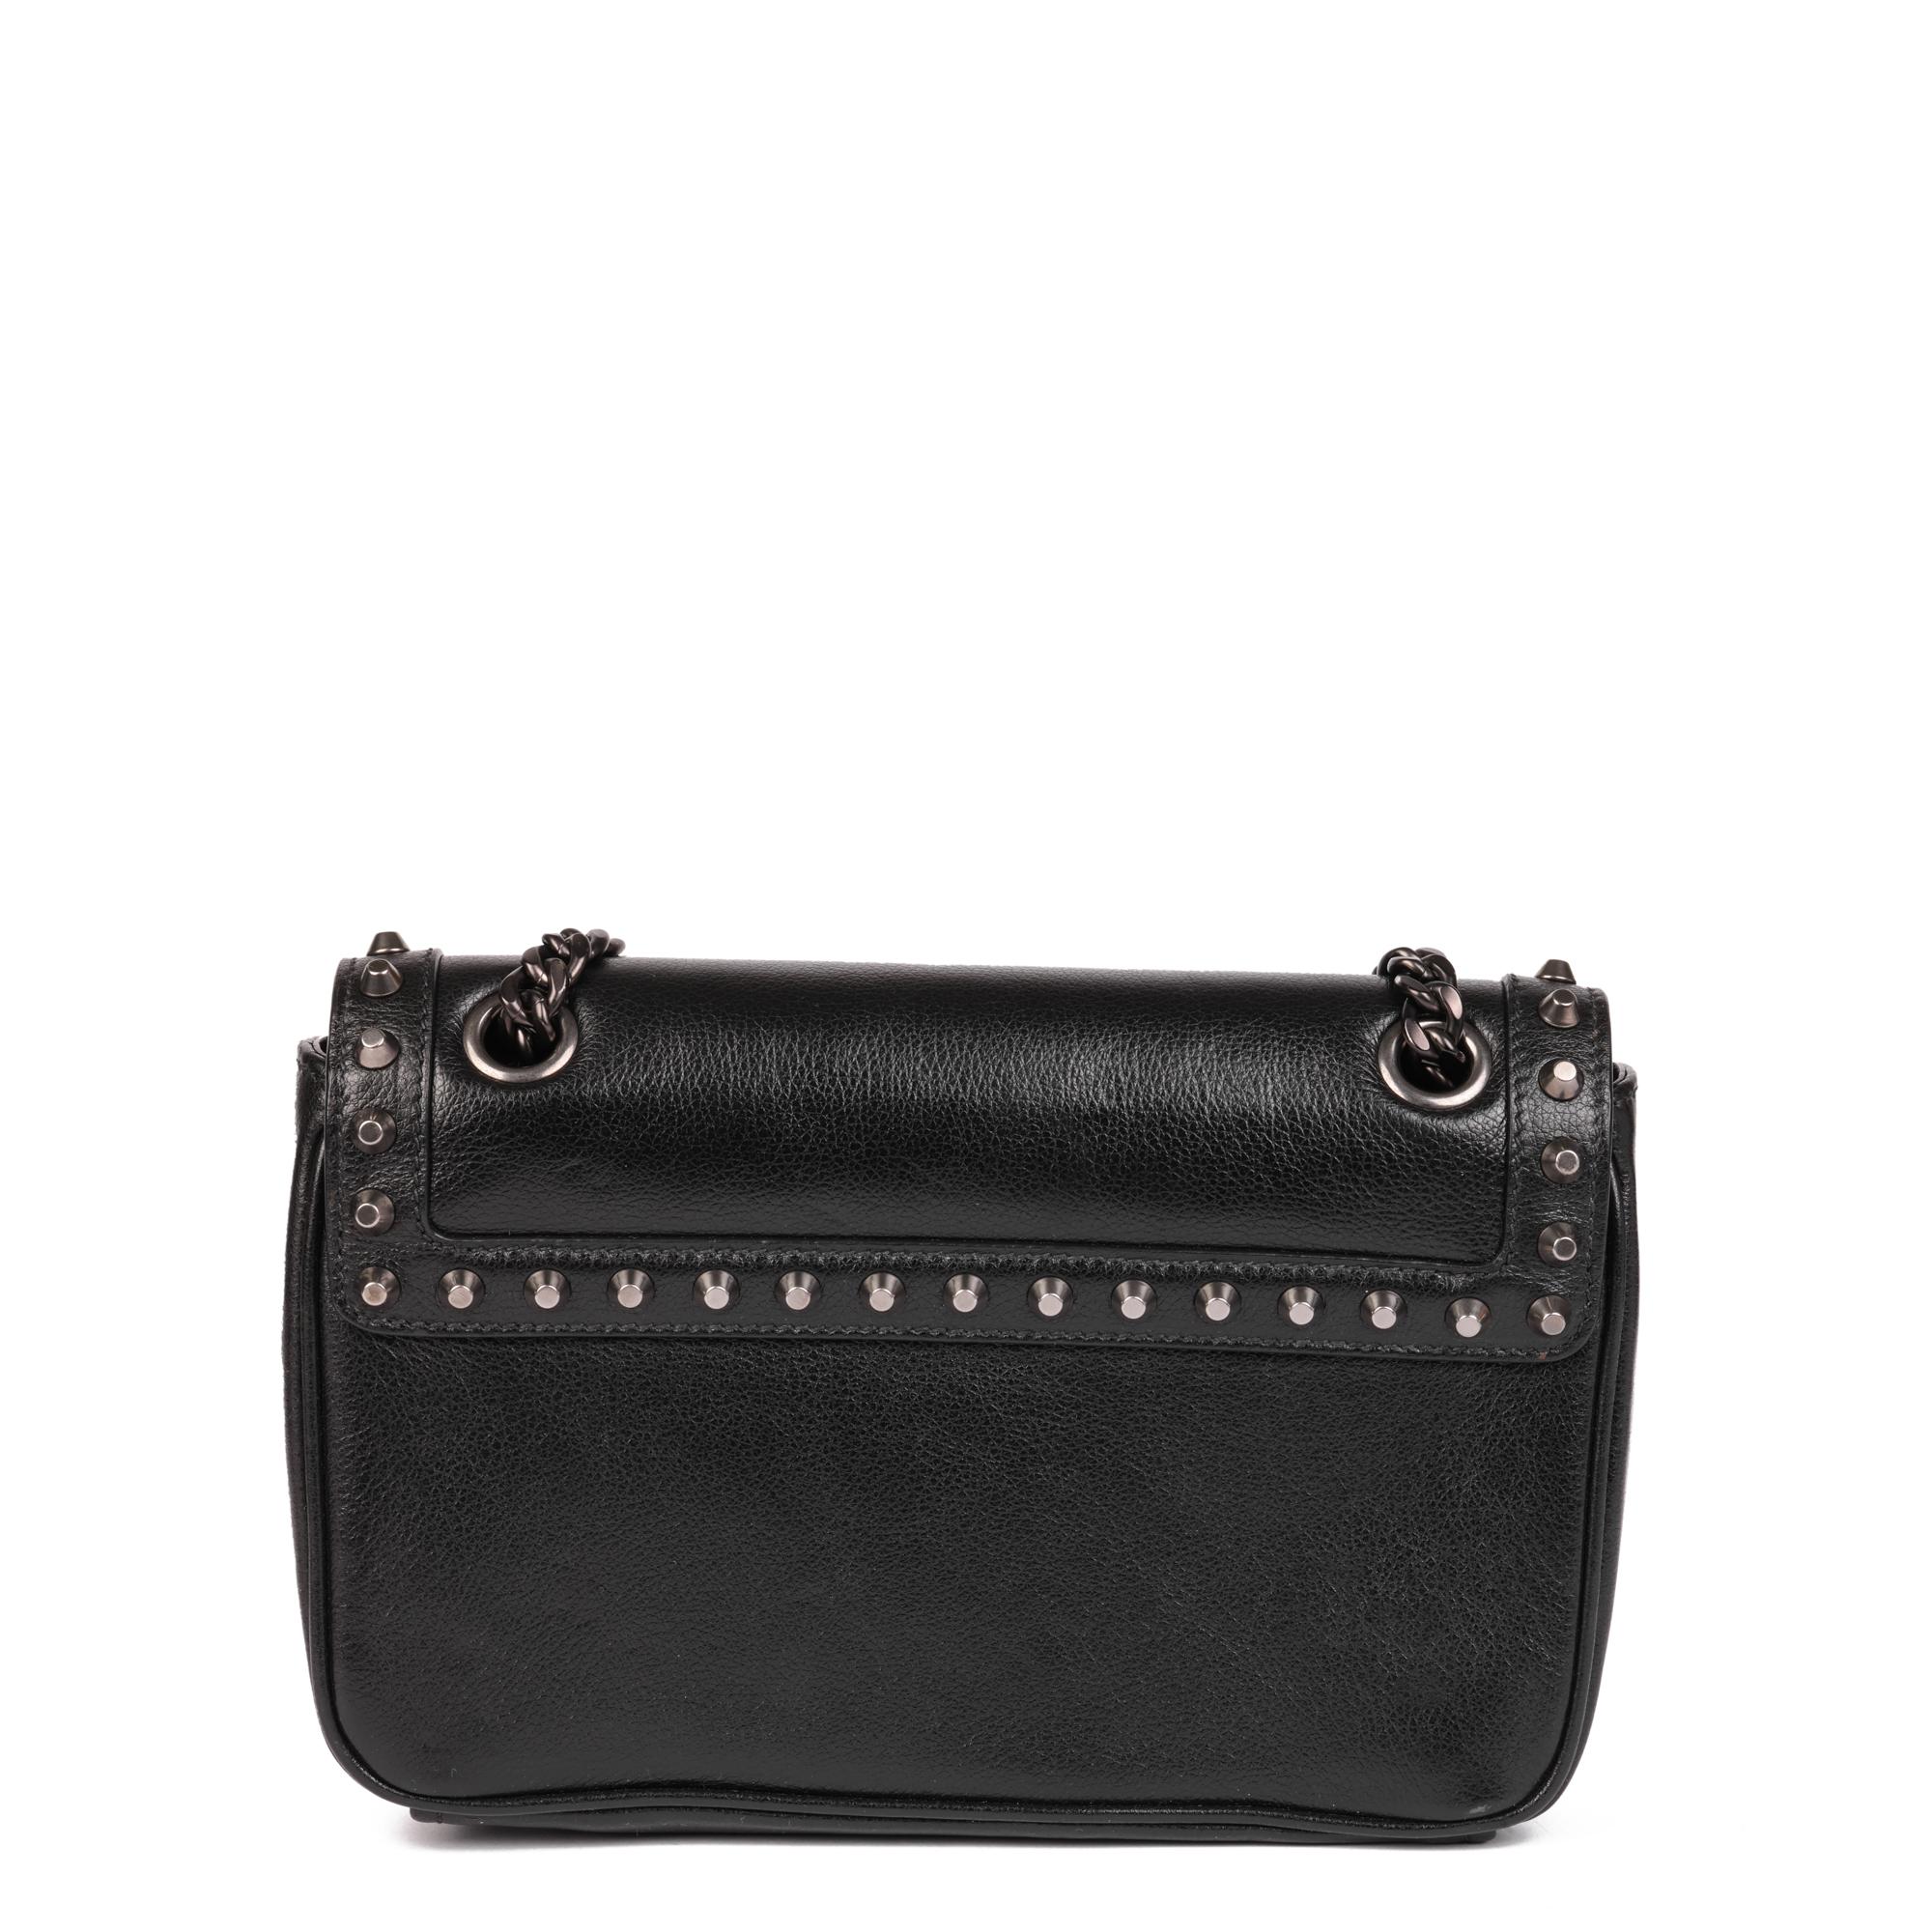 PRADA Black Calfskin Leather Studded Crossbody Bag 1